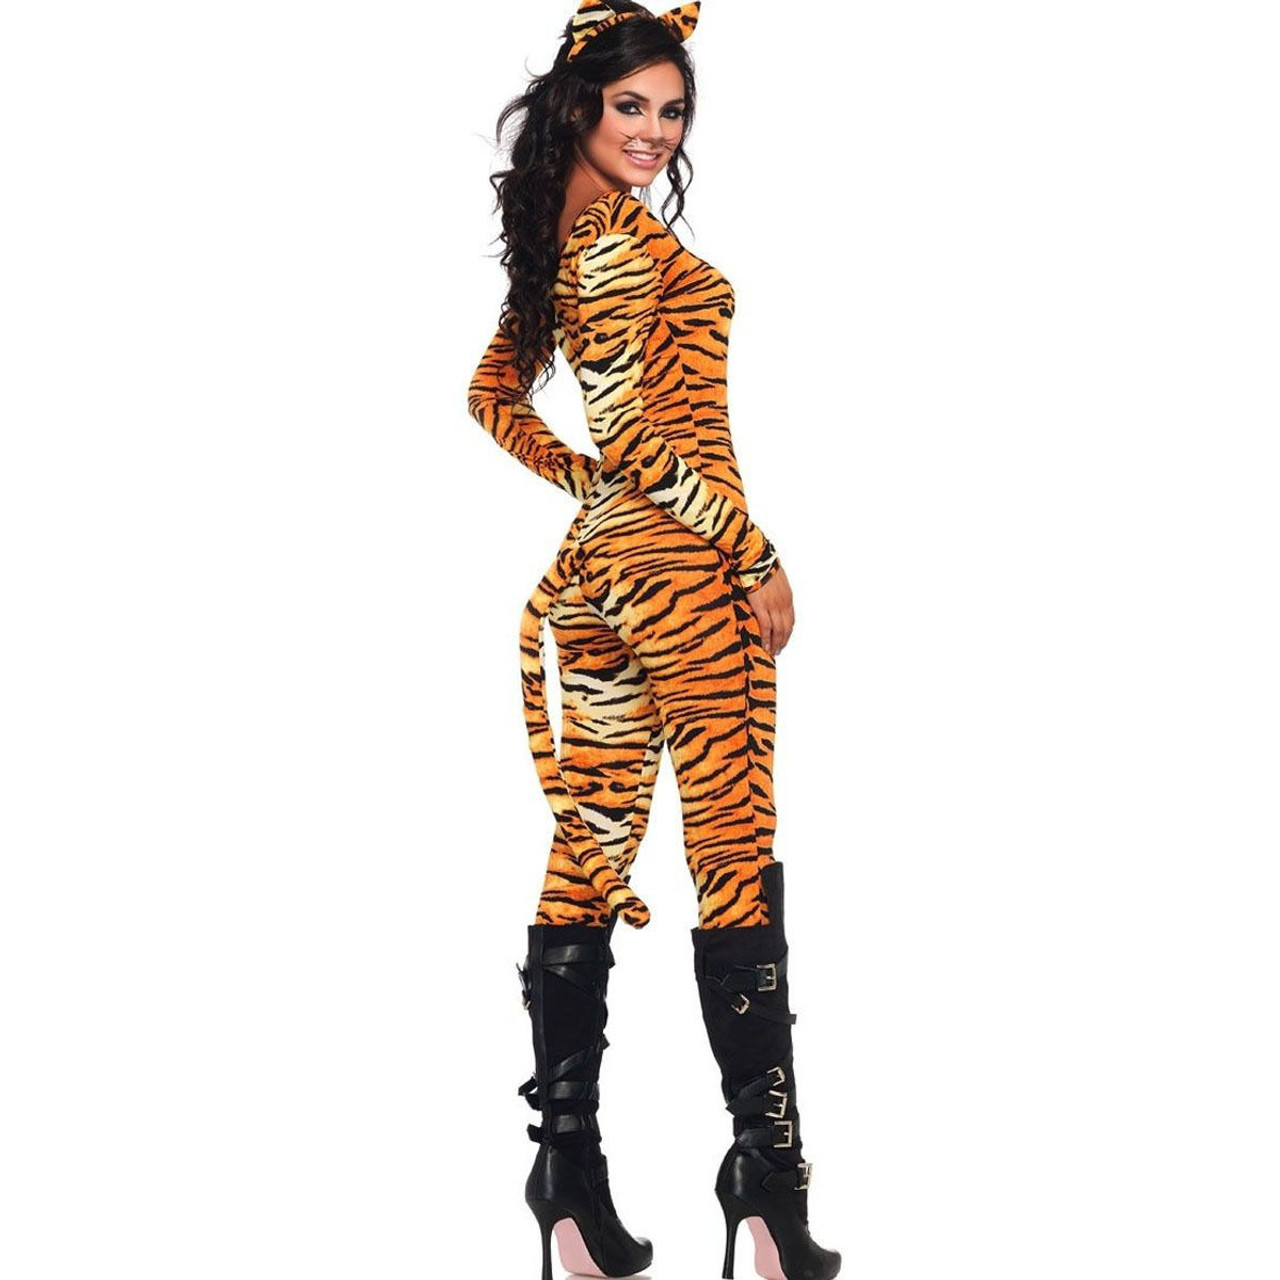 LA-83895, Wild tigress Costume